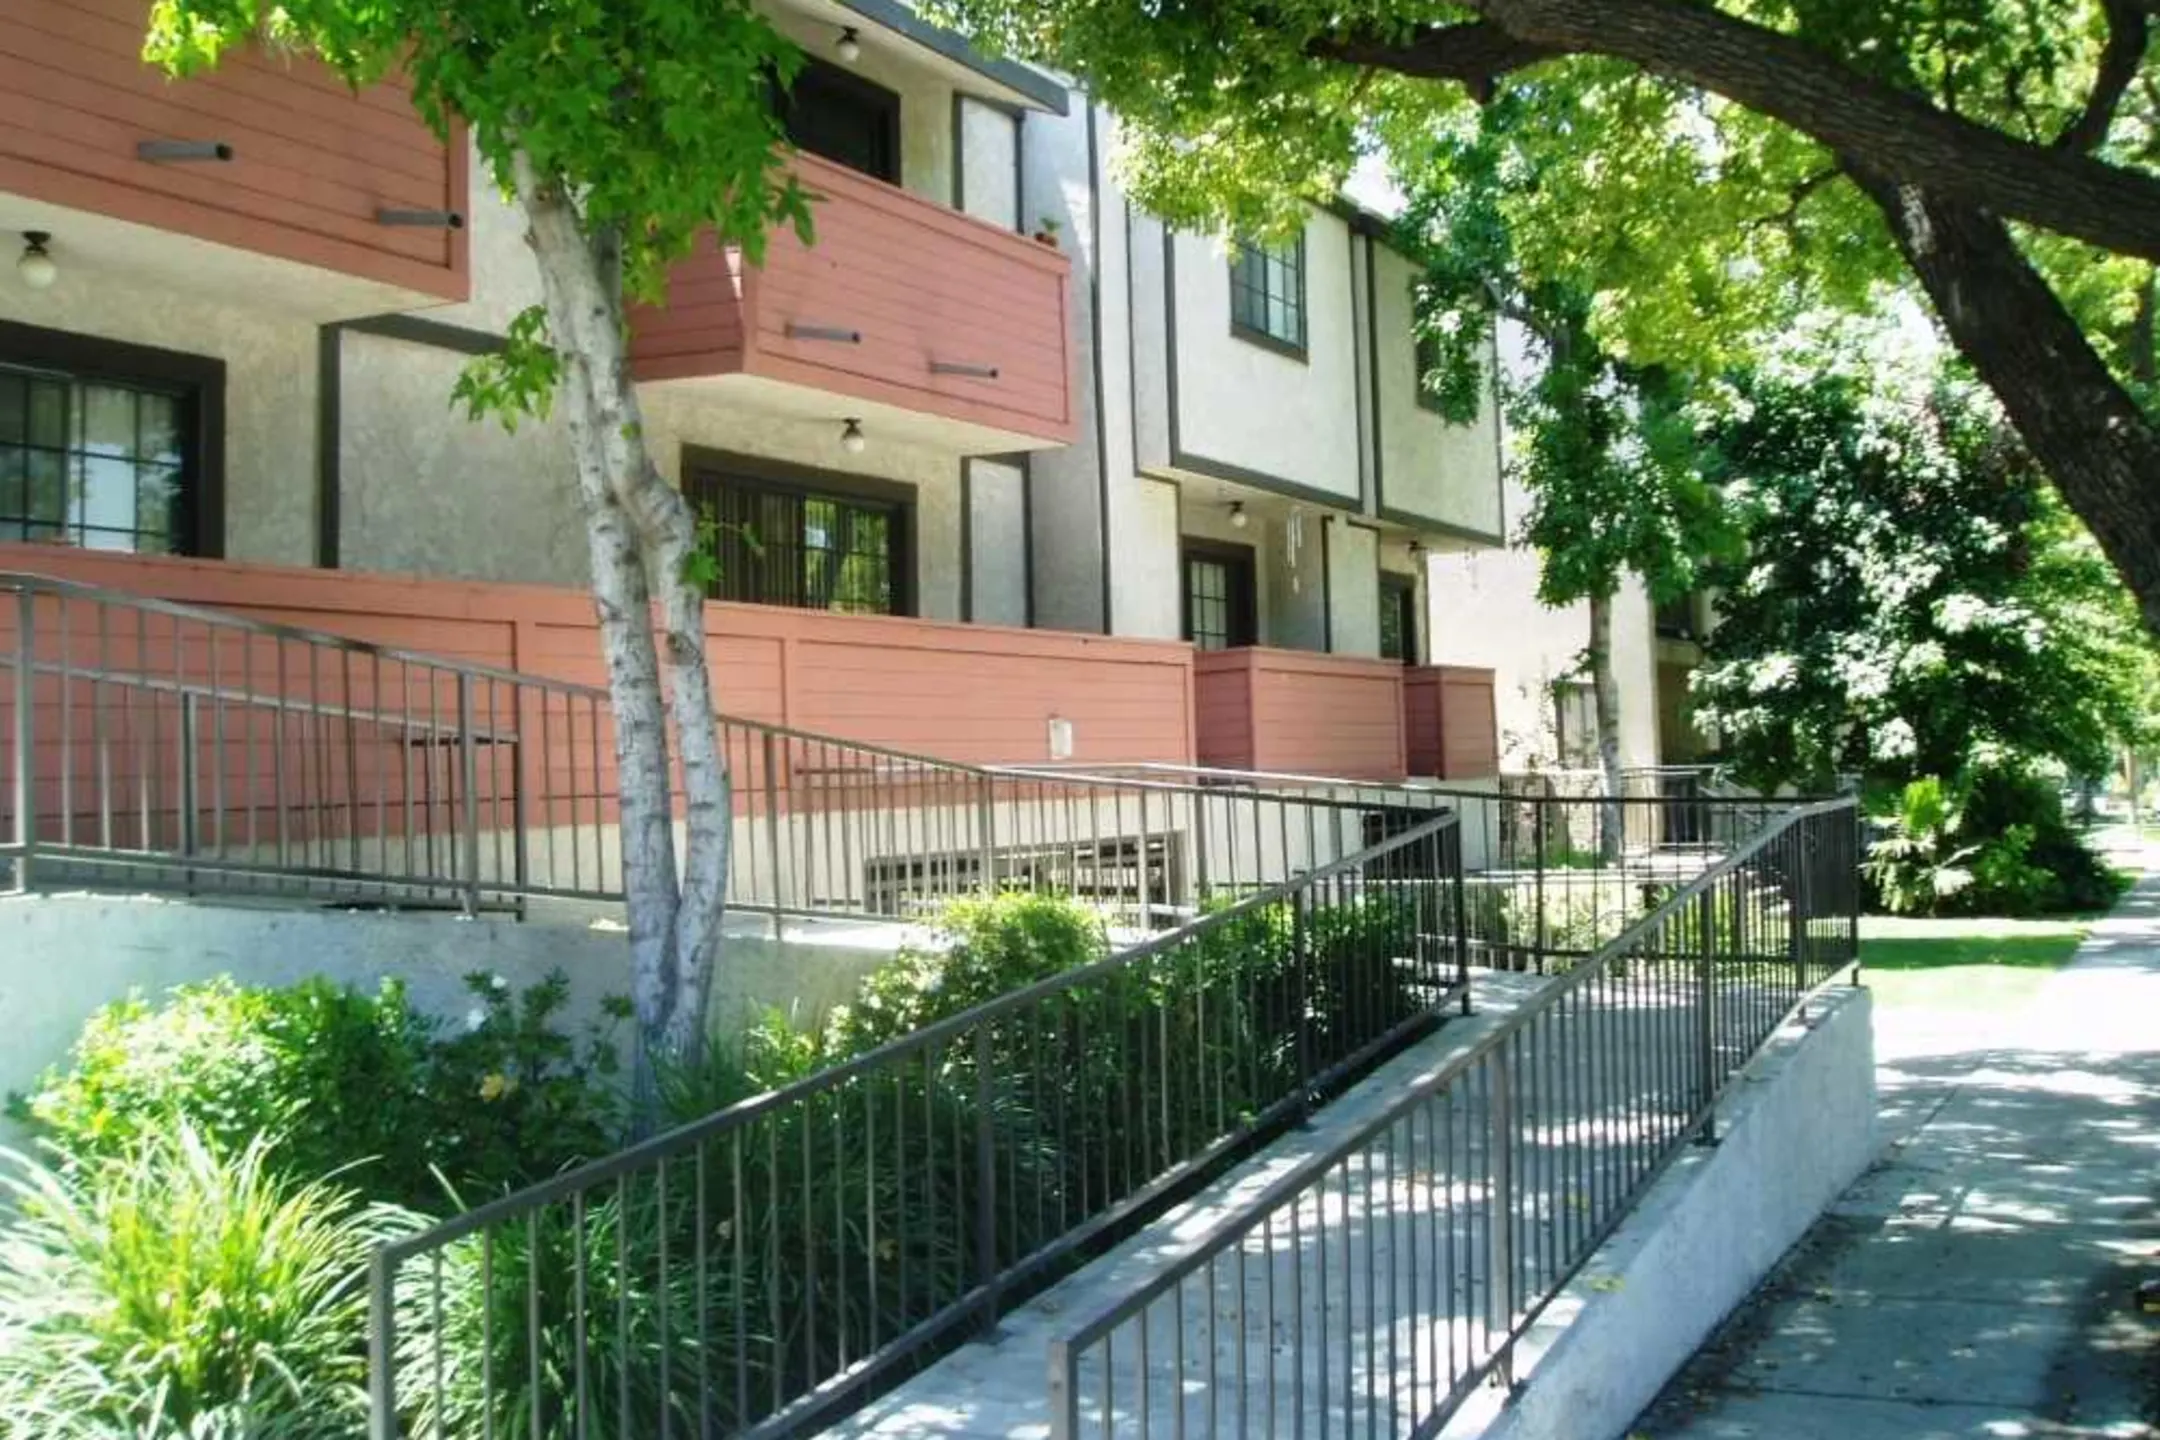 Building - Myrtle Street Apartments - Glendale, CA